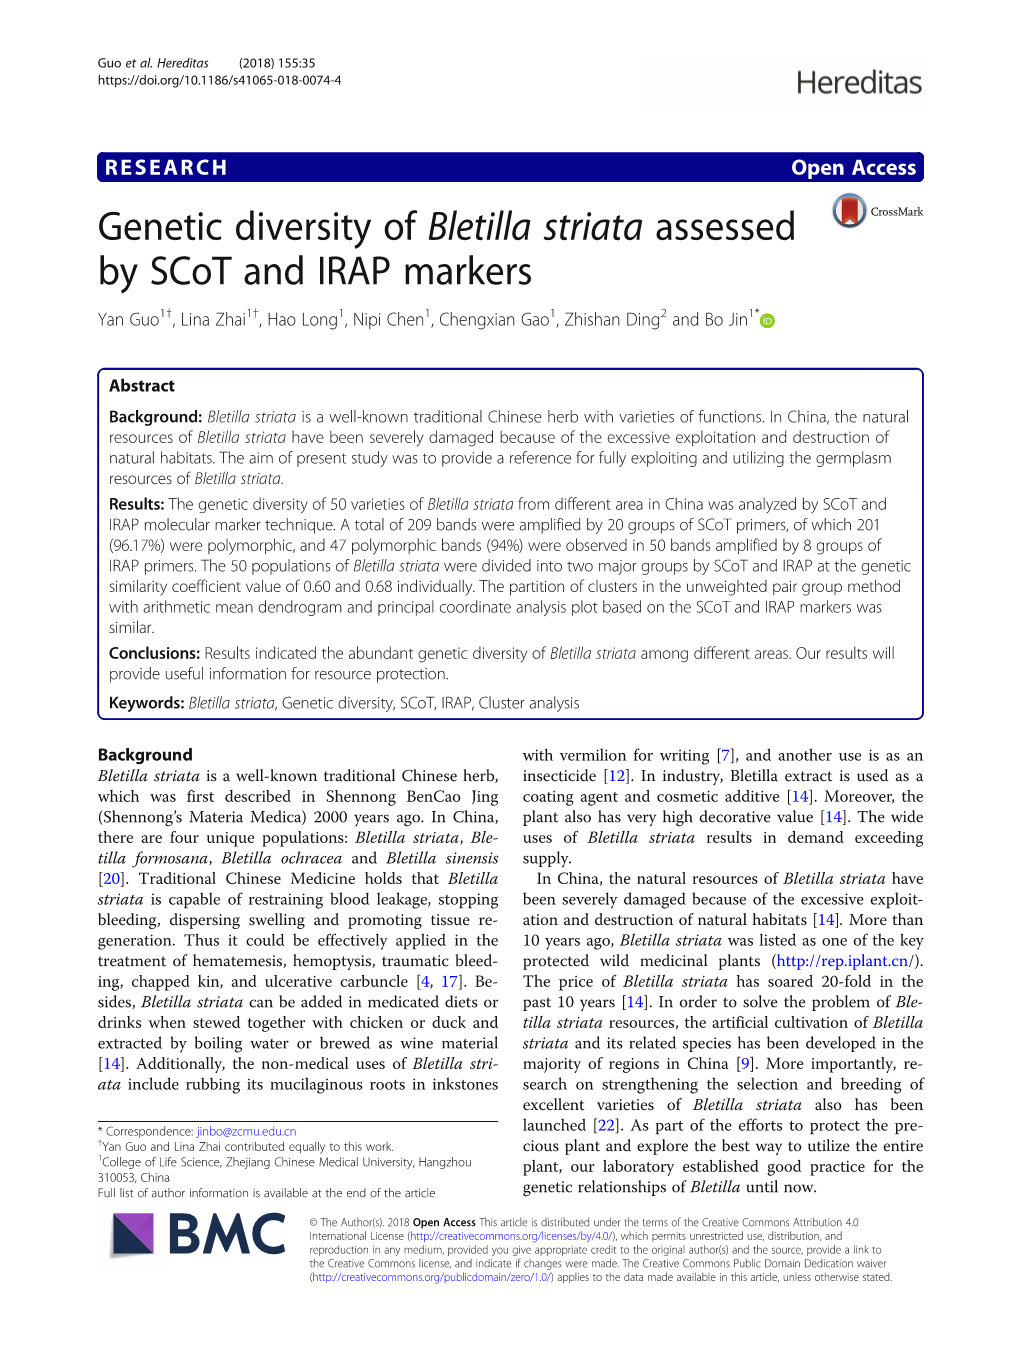 Genetic Diversity of Bletilla Striata Assessed by Scot and IRAP Markers Yan Guo1†, Lina Zhai1†, Hao Long1, Nipi Chen1, Chengxian Gao1, Zhishan Ding2 and Bo Jin1*